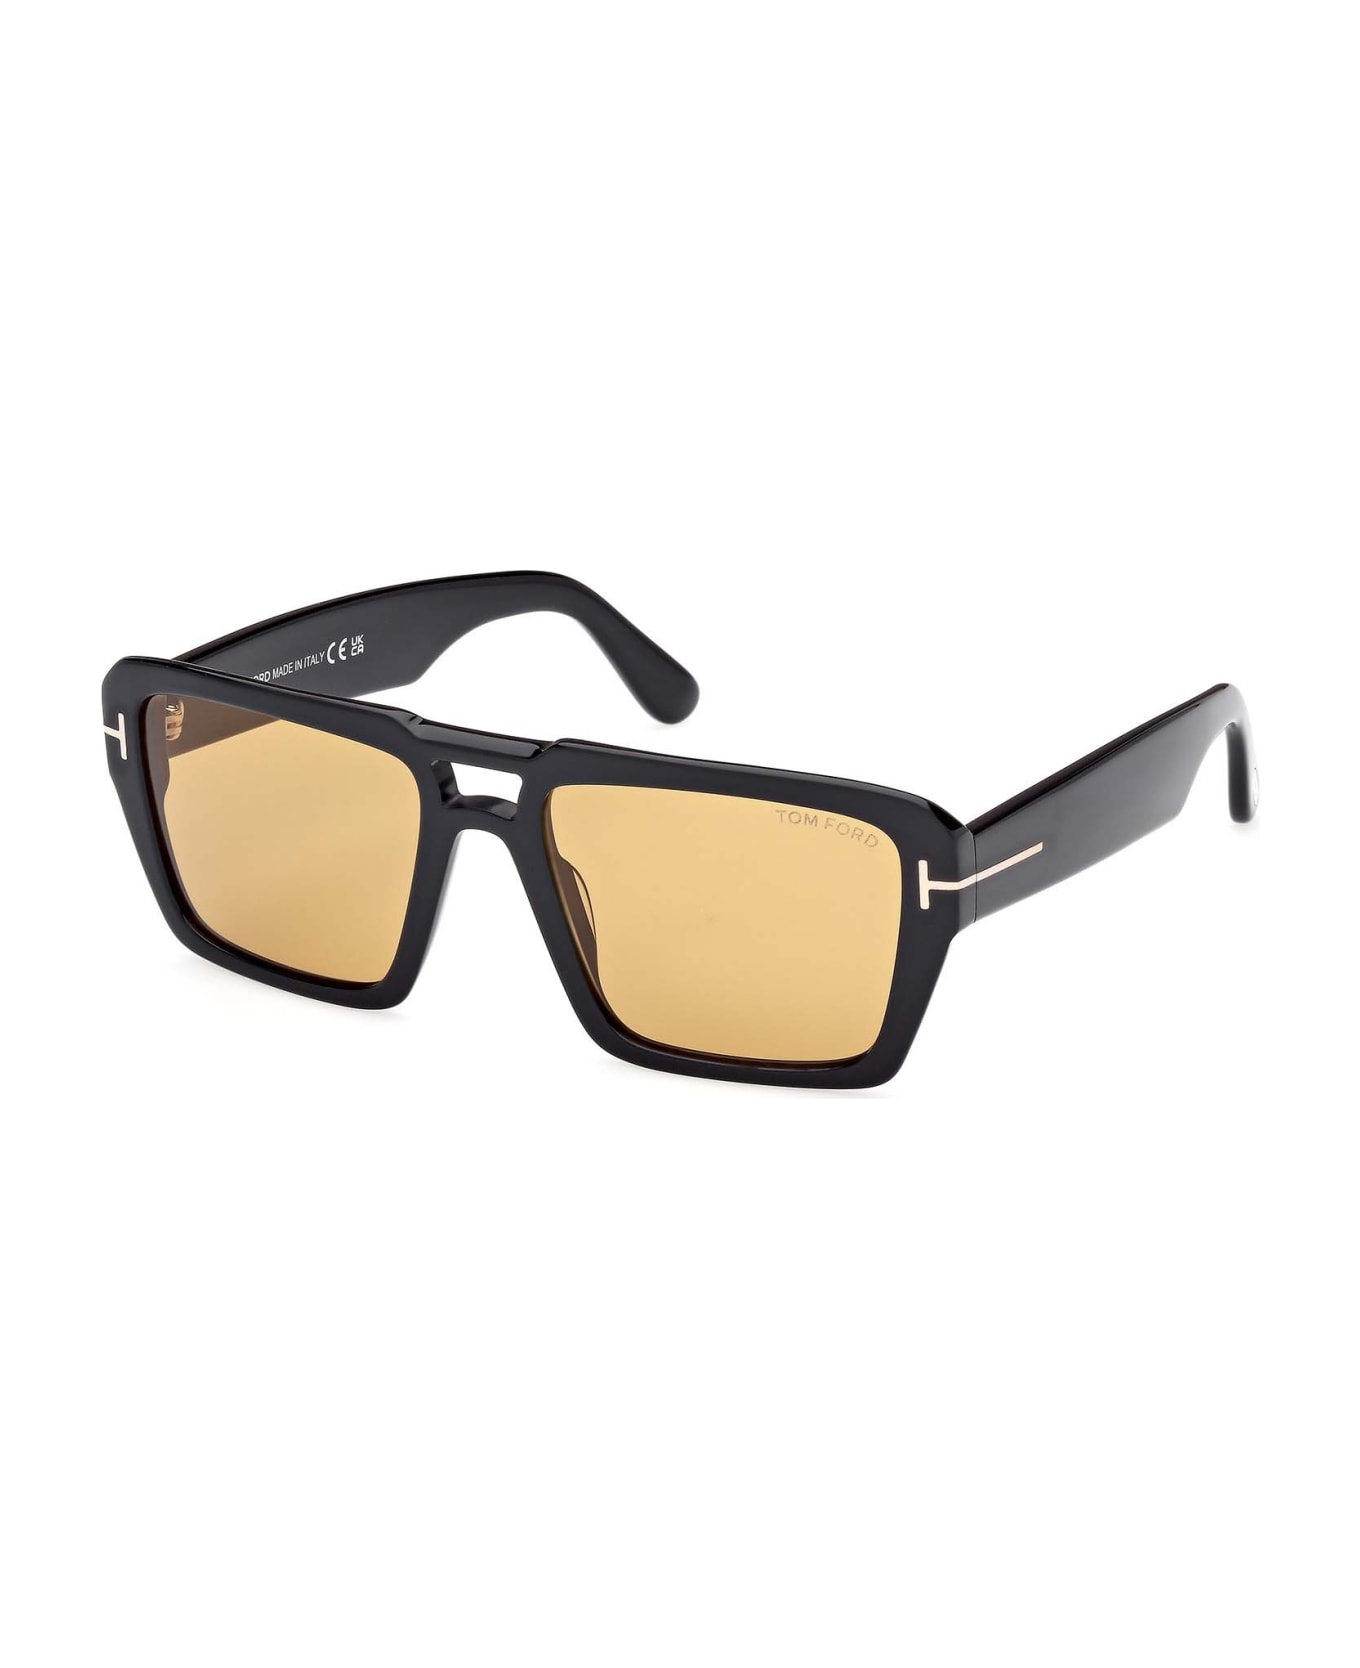 Tom Ford Eyewear Sunglasses - Nero/Marrone サングラス